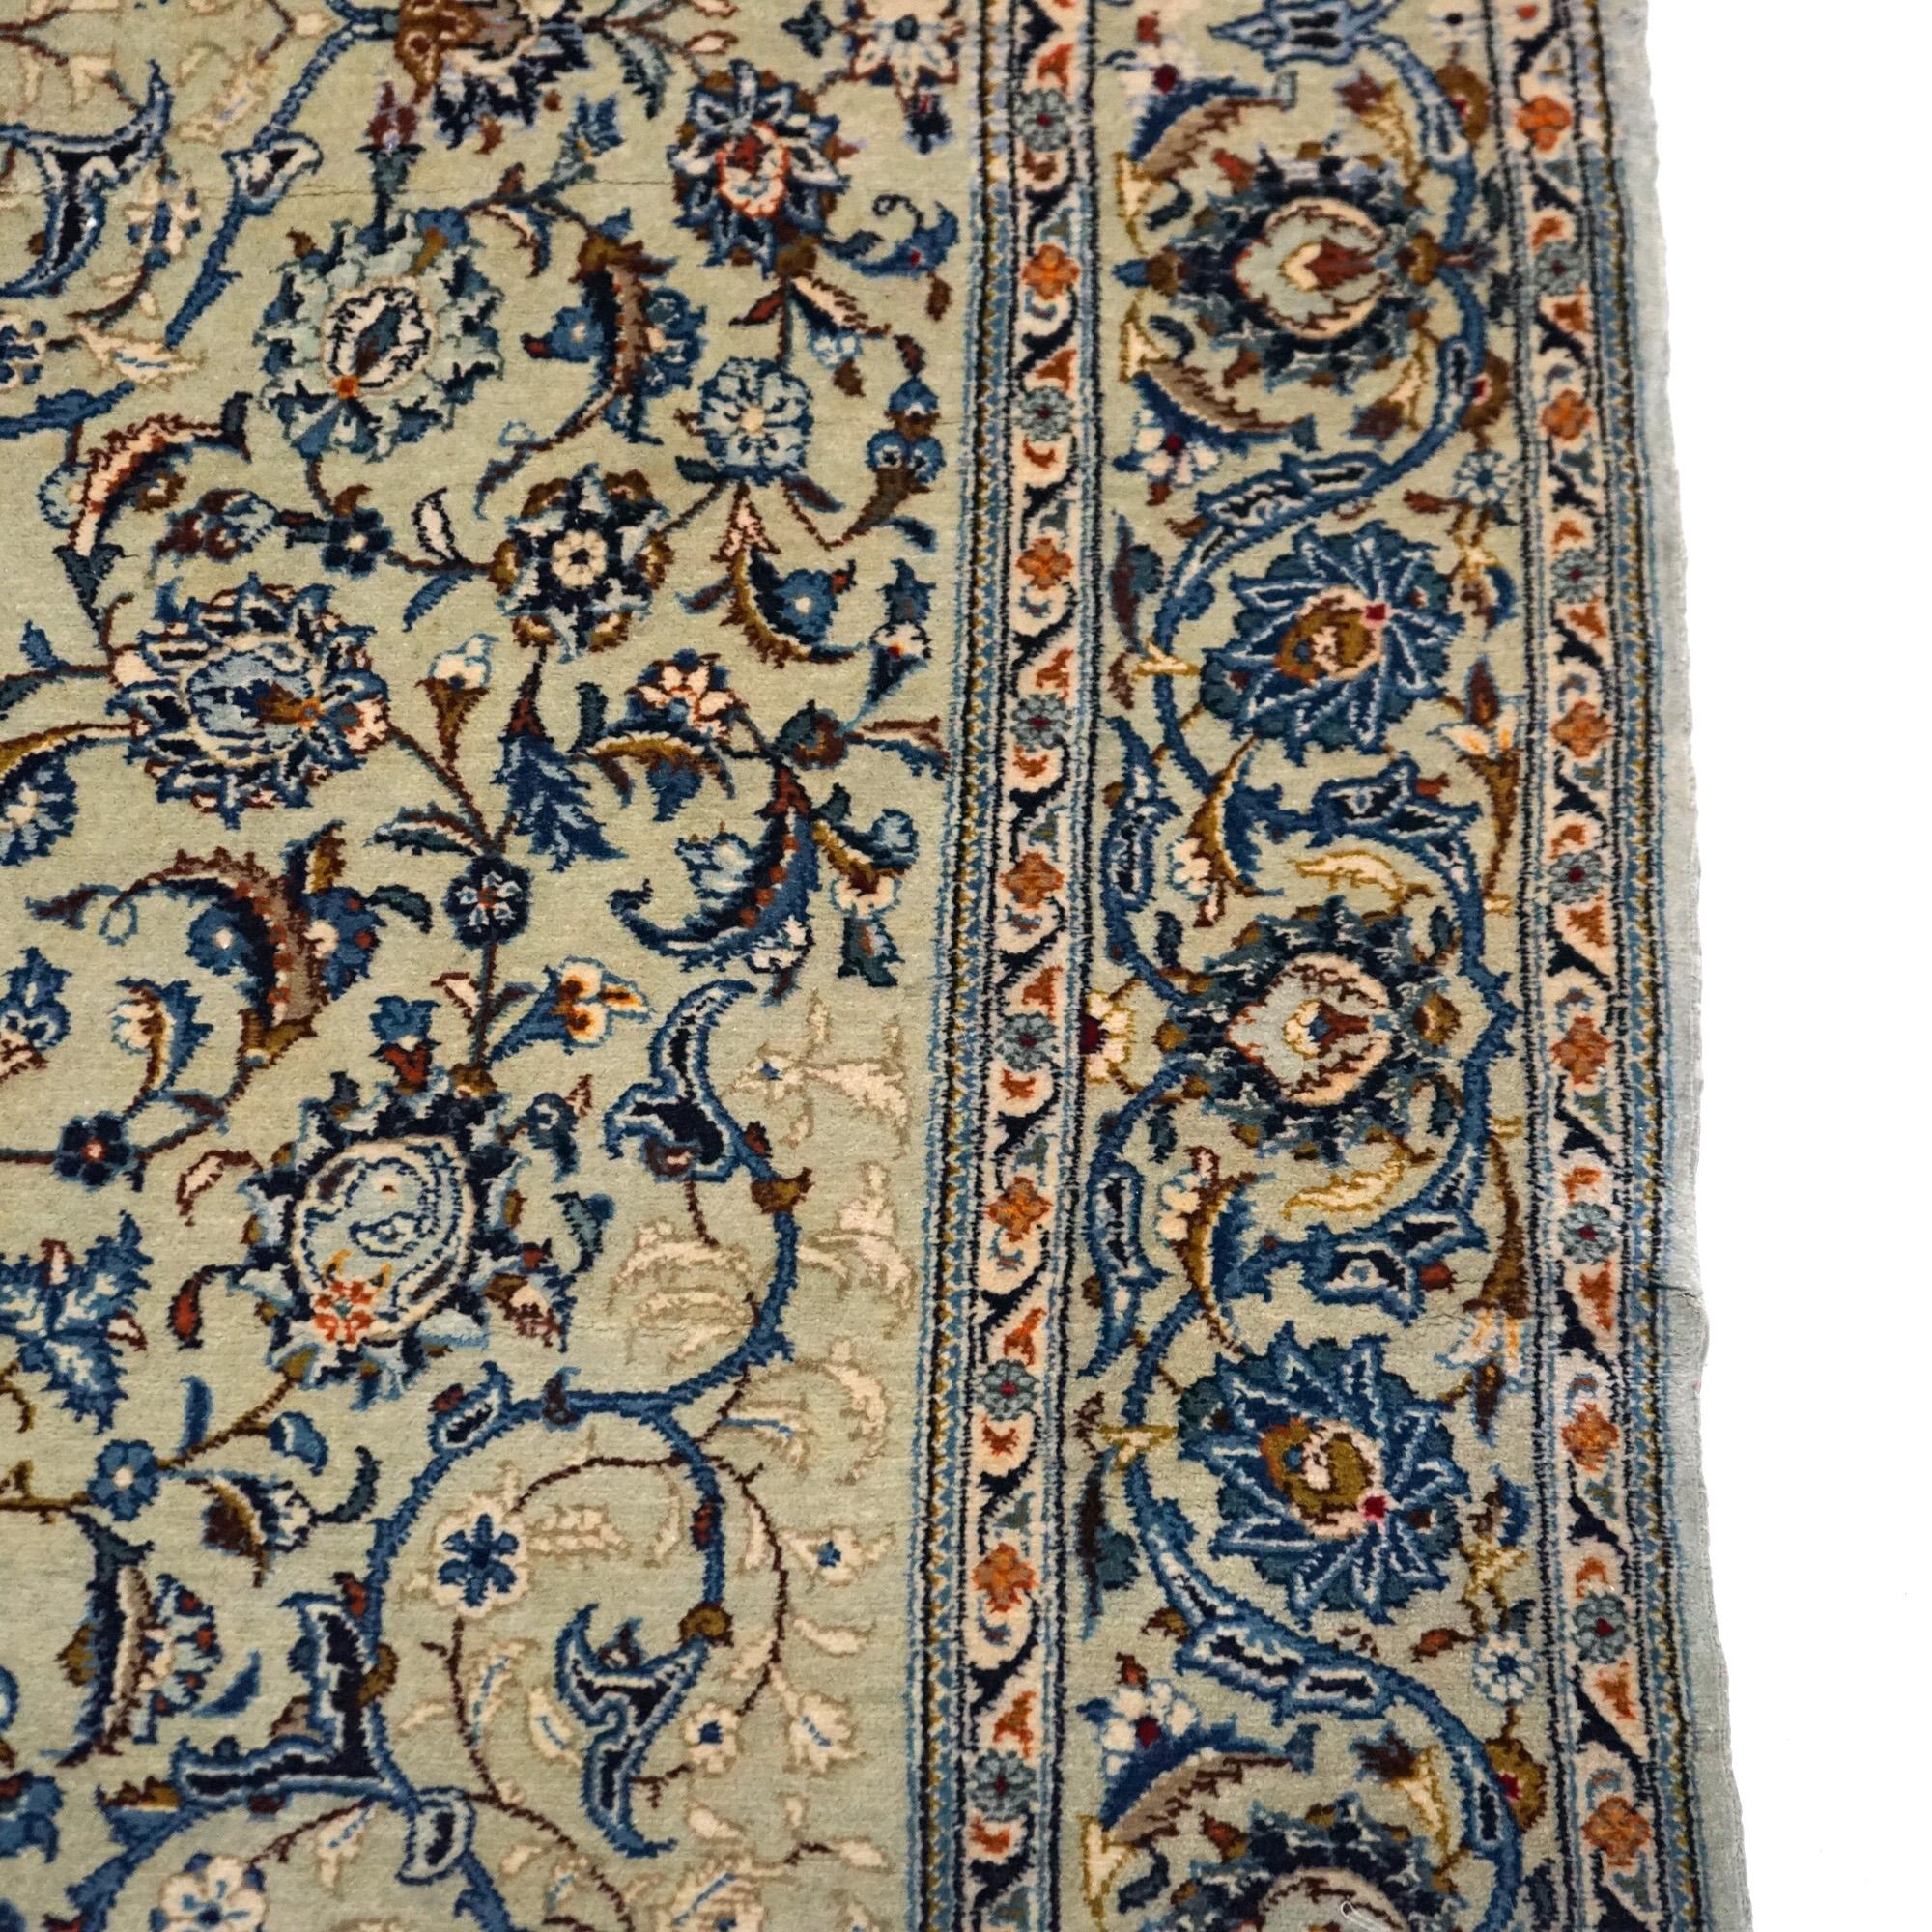 Antique Tabriz Oriental Wool Rug with Allover Floral Garden Design Circa 1940 6